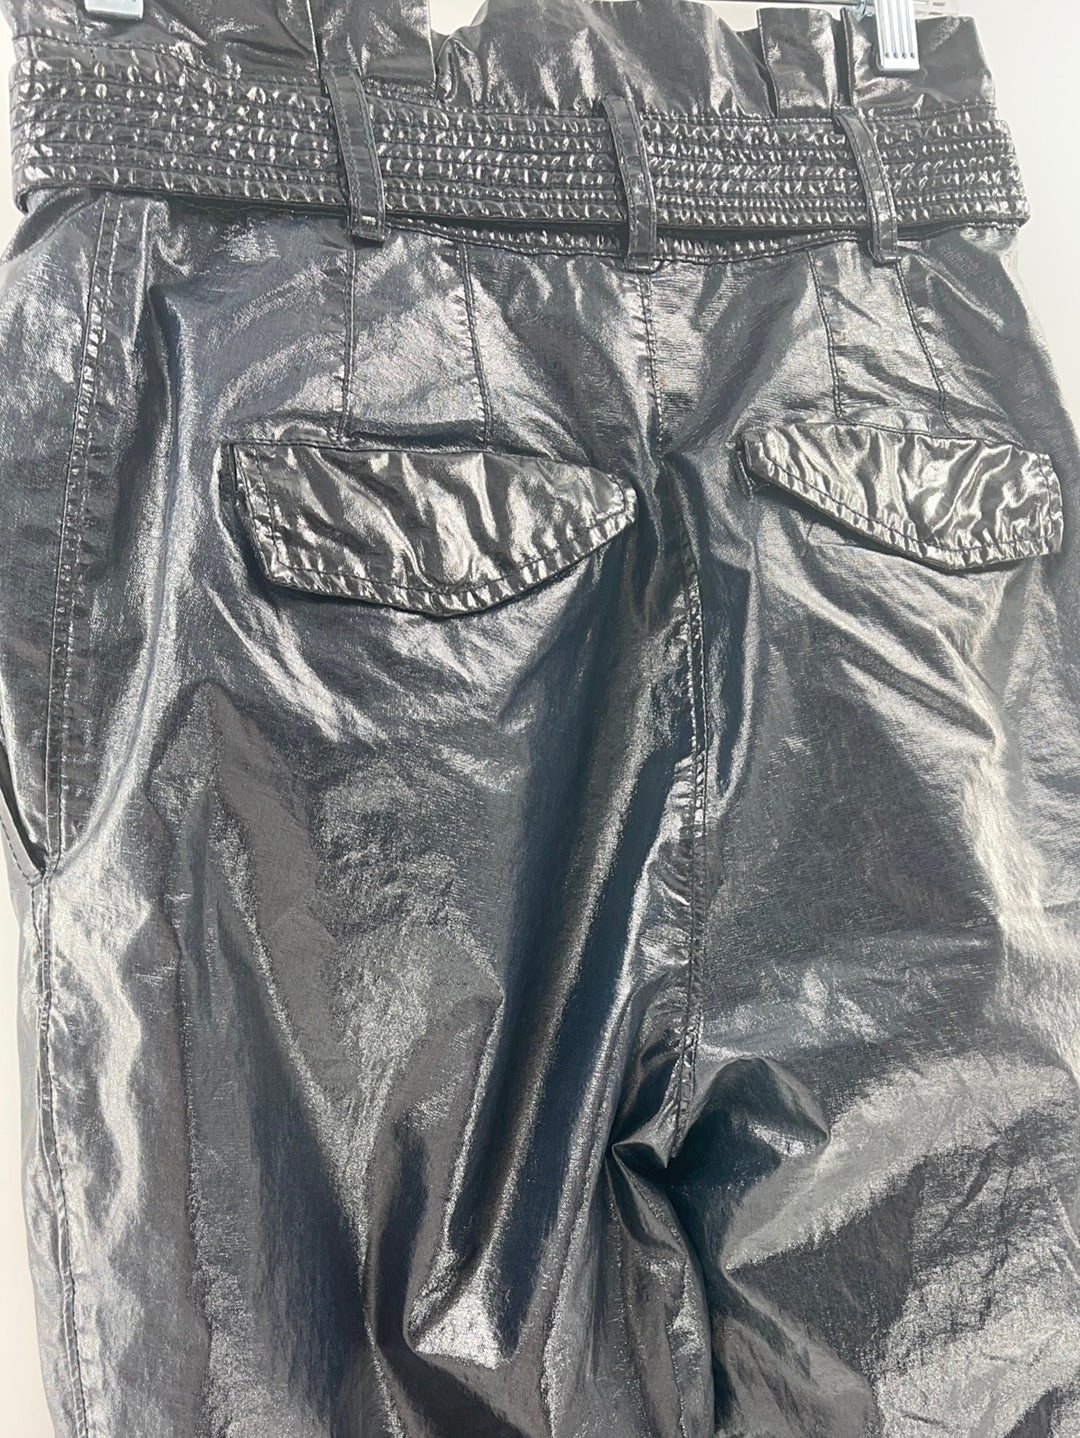 Free People Shiny Black Pants with Belt (Size 4)